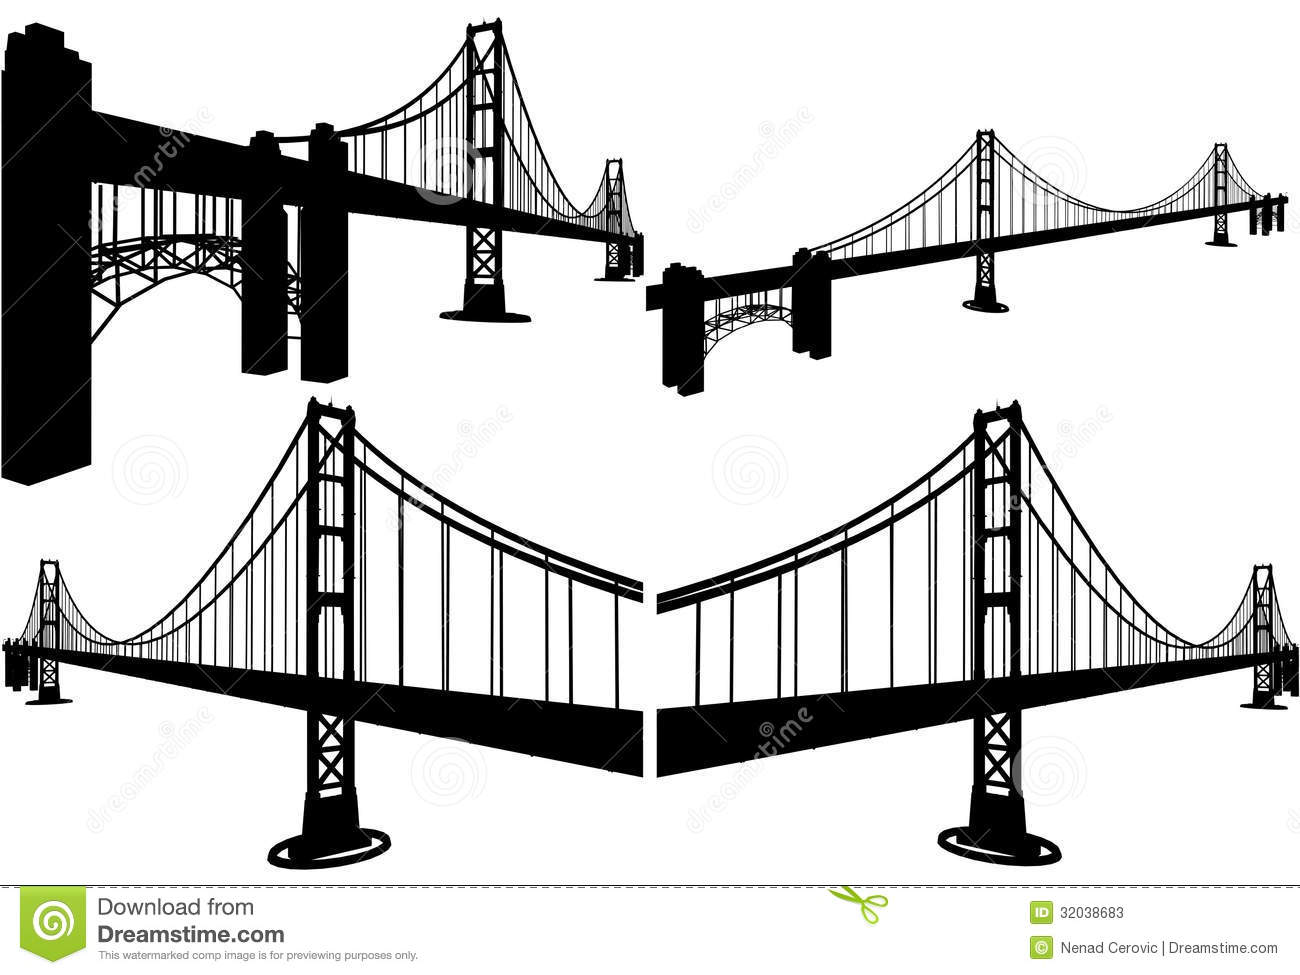 12 Truss Bridge Vector Clip Art Images - Stage Truss Clip Art, Bridge